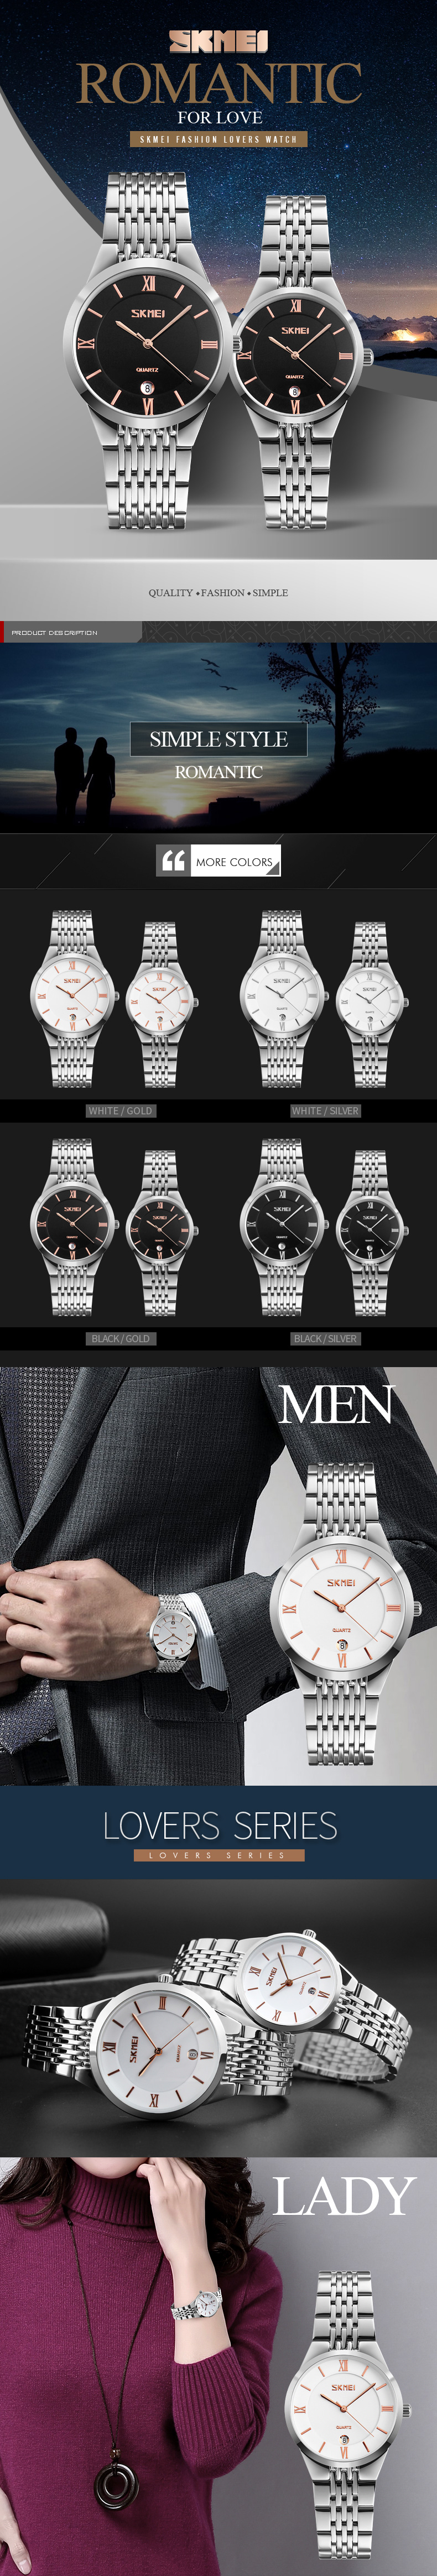 SKMEI-9139-Casual-Style-Calendar-Men-Women-Wrist-Watch-Leather-Strap-Couple-Watches-1258744